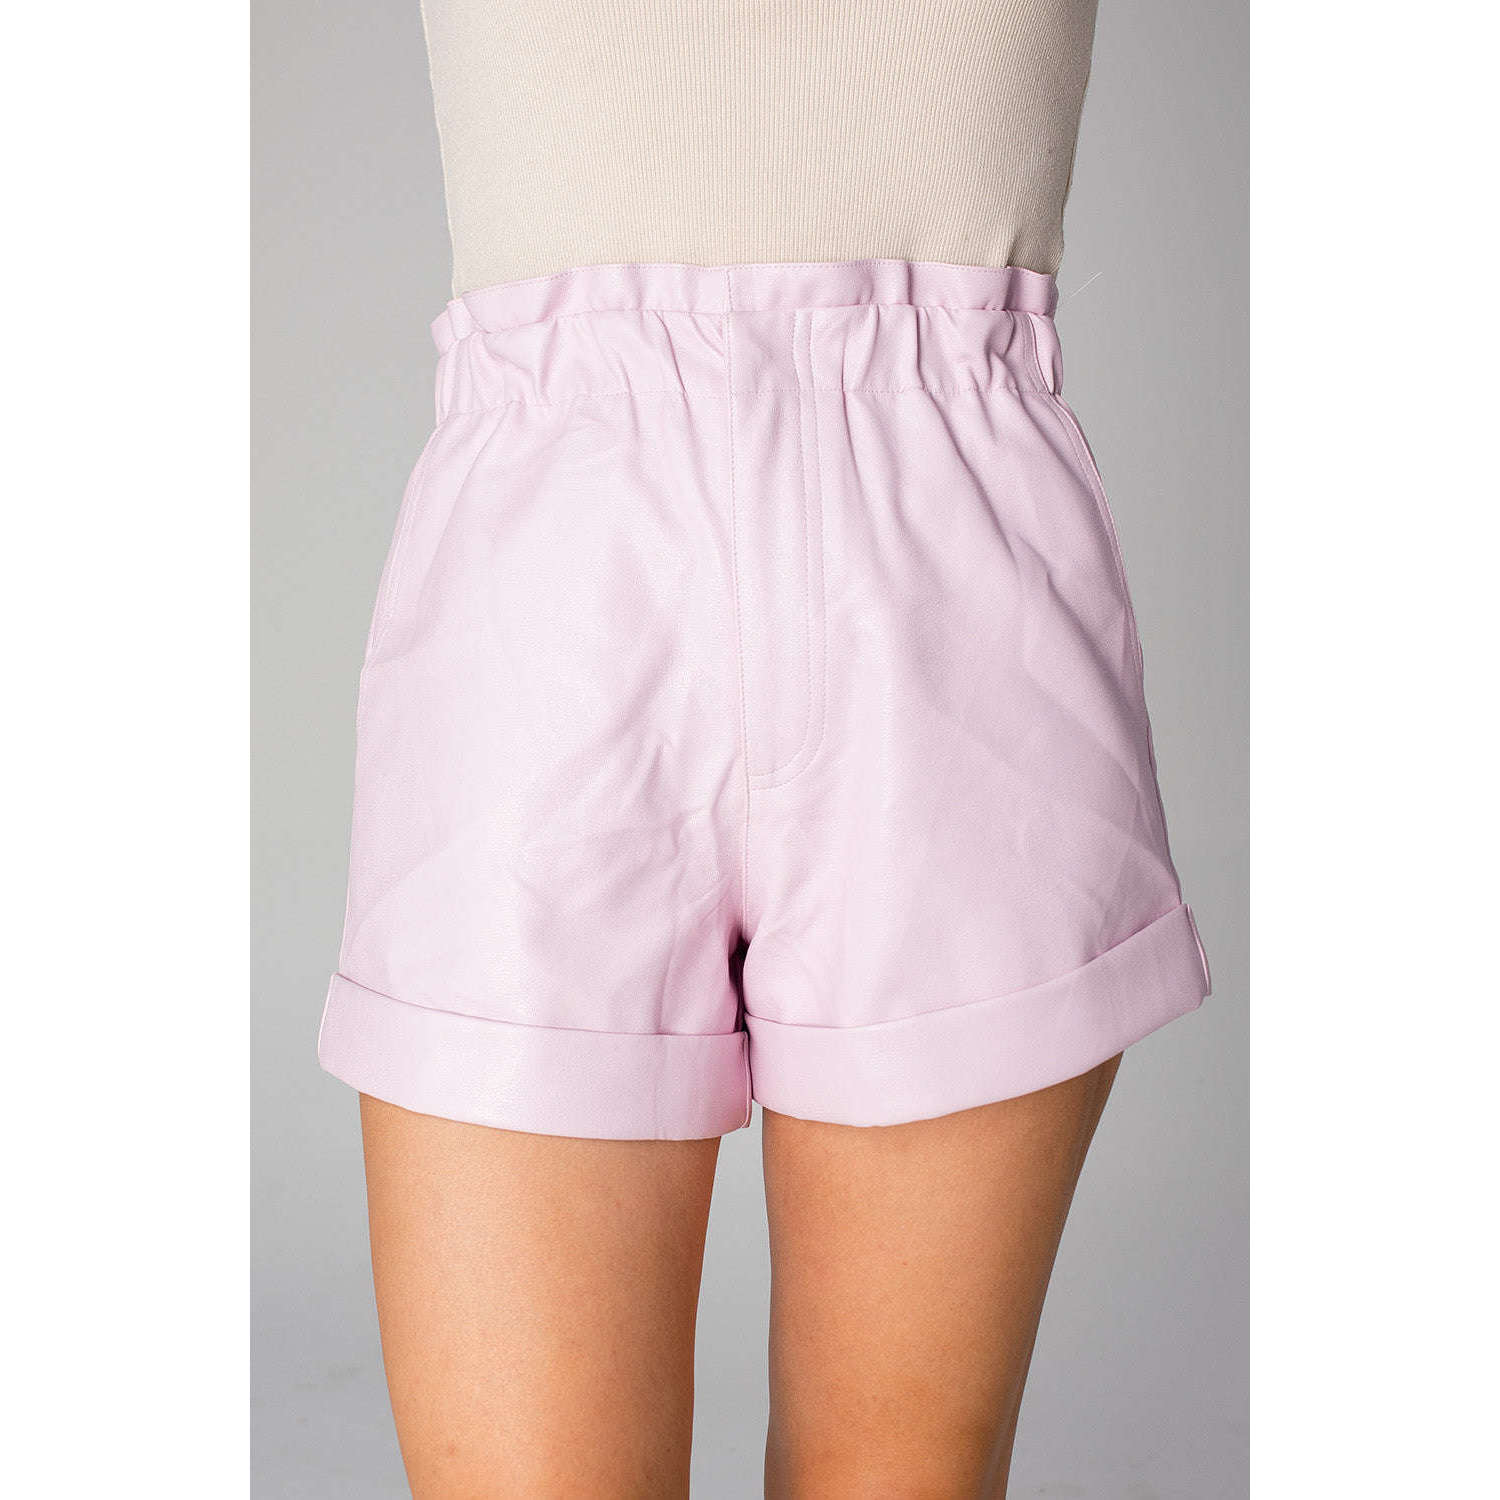 8.28 Boutique:Buddy Love,Buddy Love Peyton Lavender Shorts,Shorts